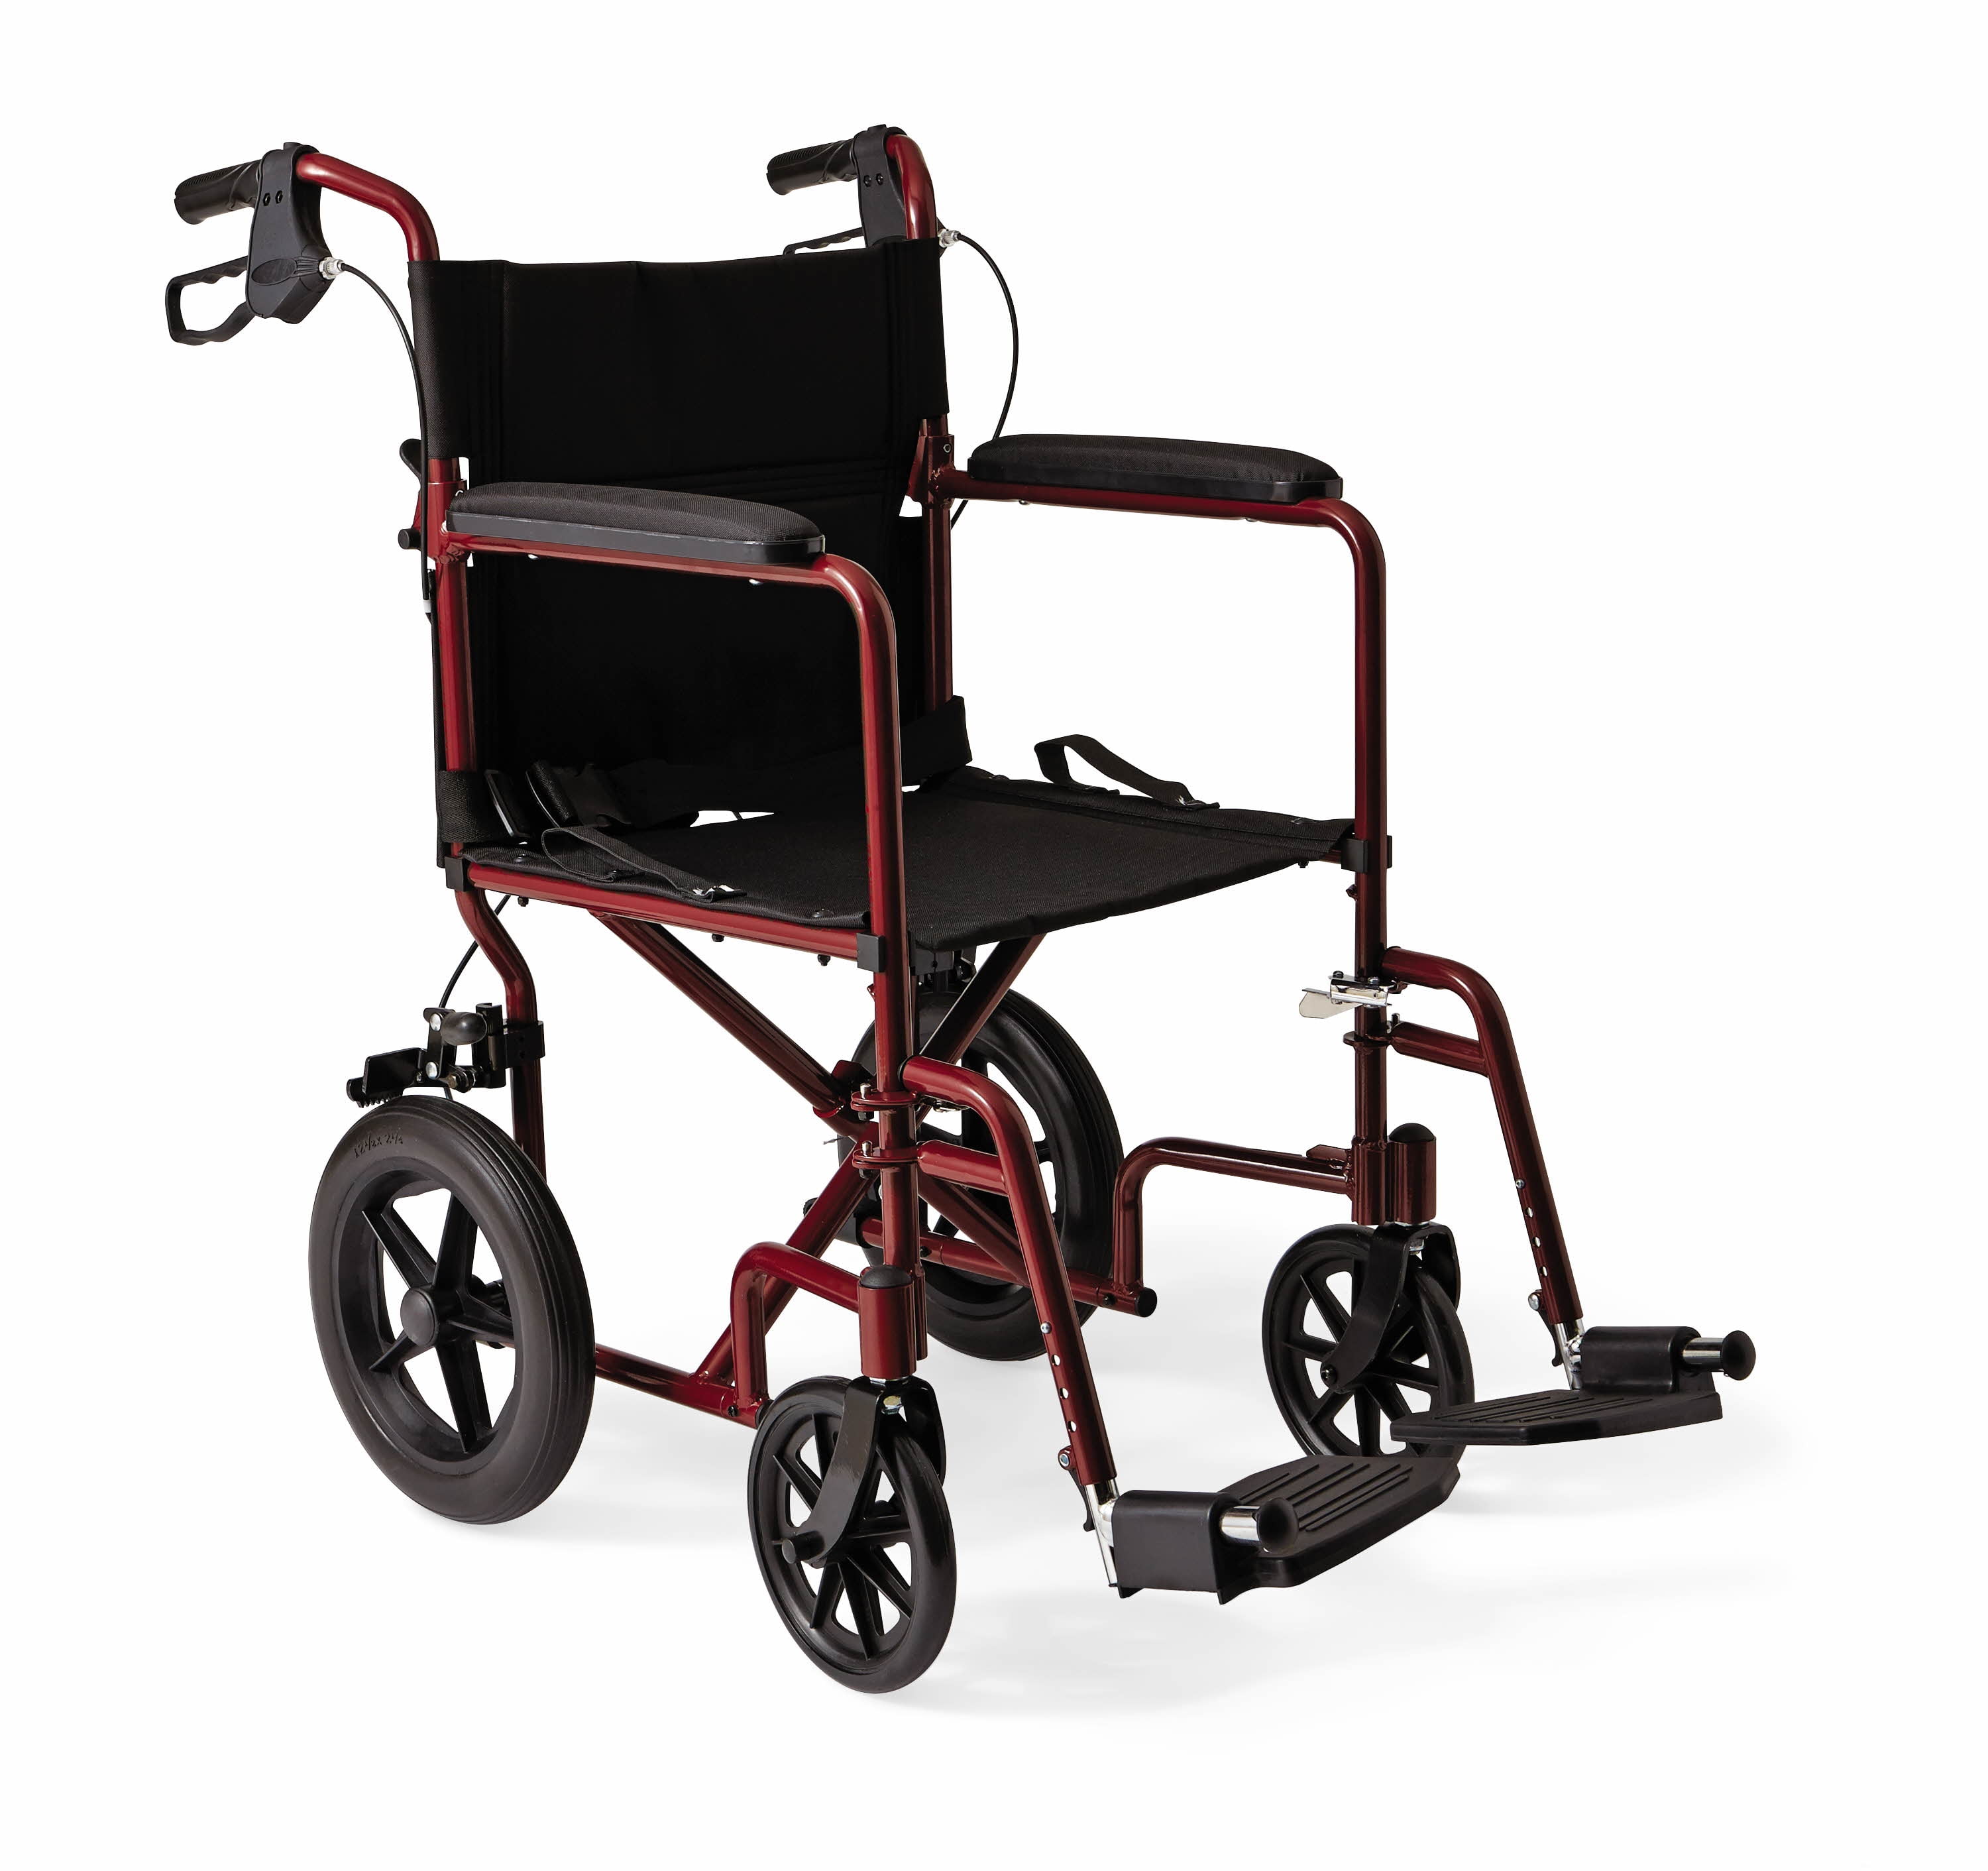 lightweight folding transit travel wheelchair